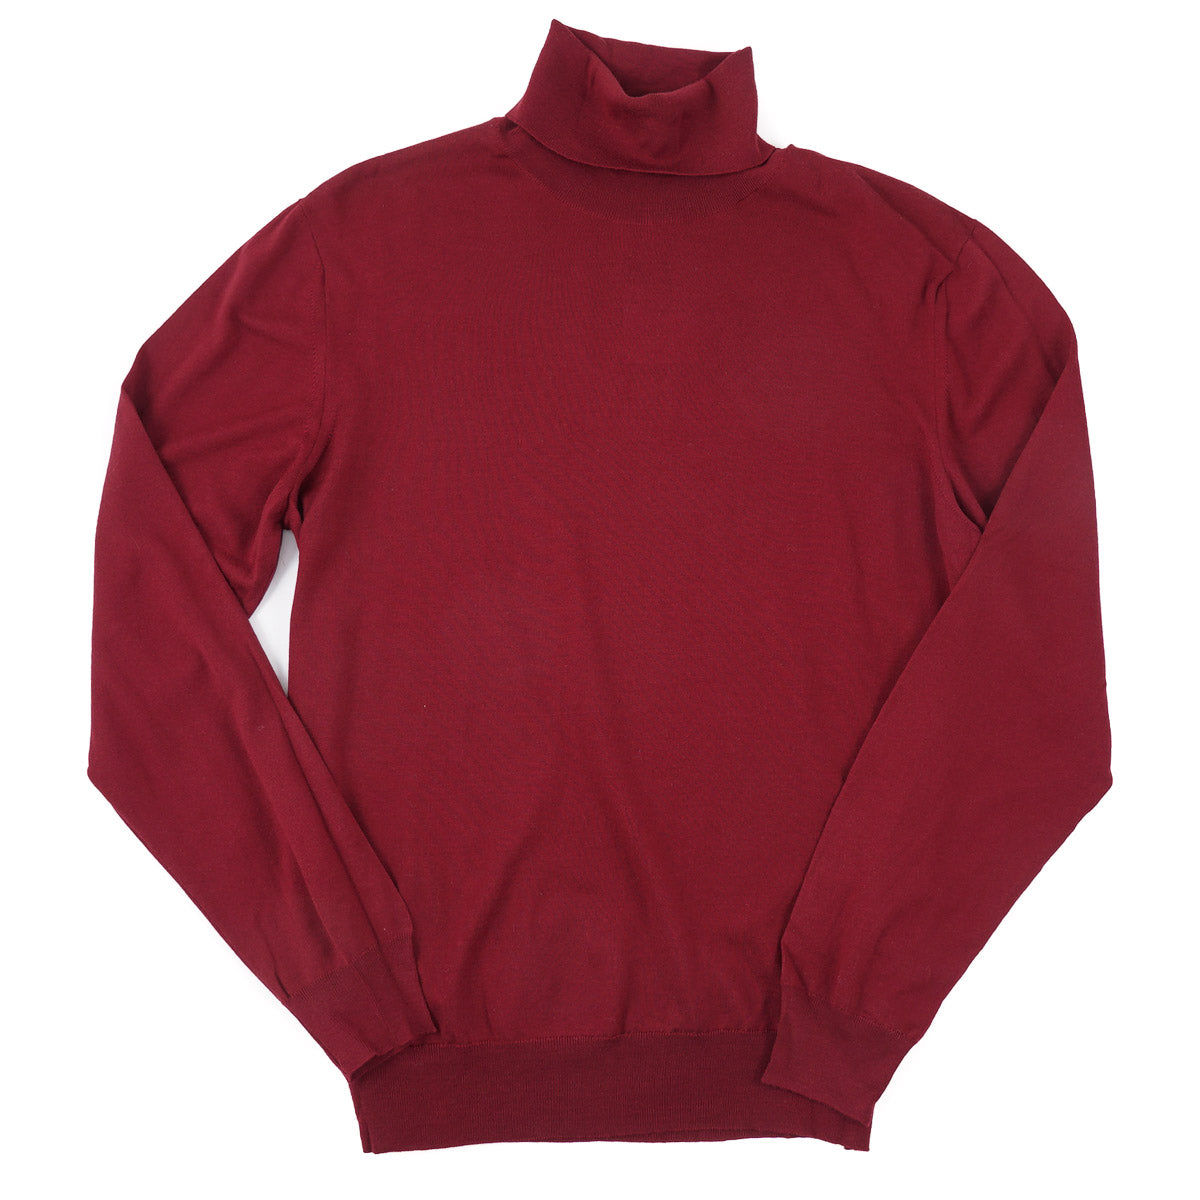 Kiton Lightweight Superfine Wool Sweater - Top Shelf Apparel